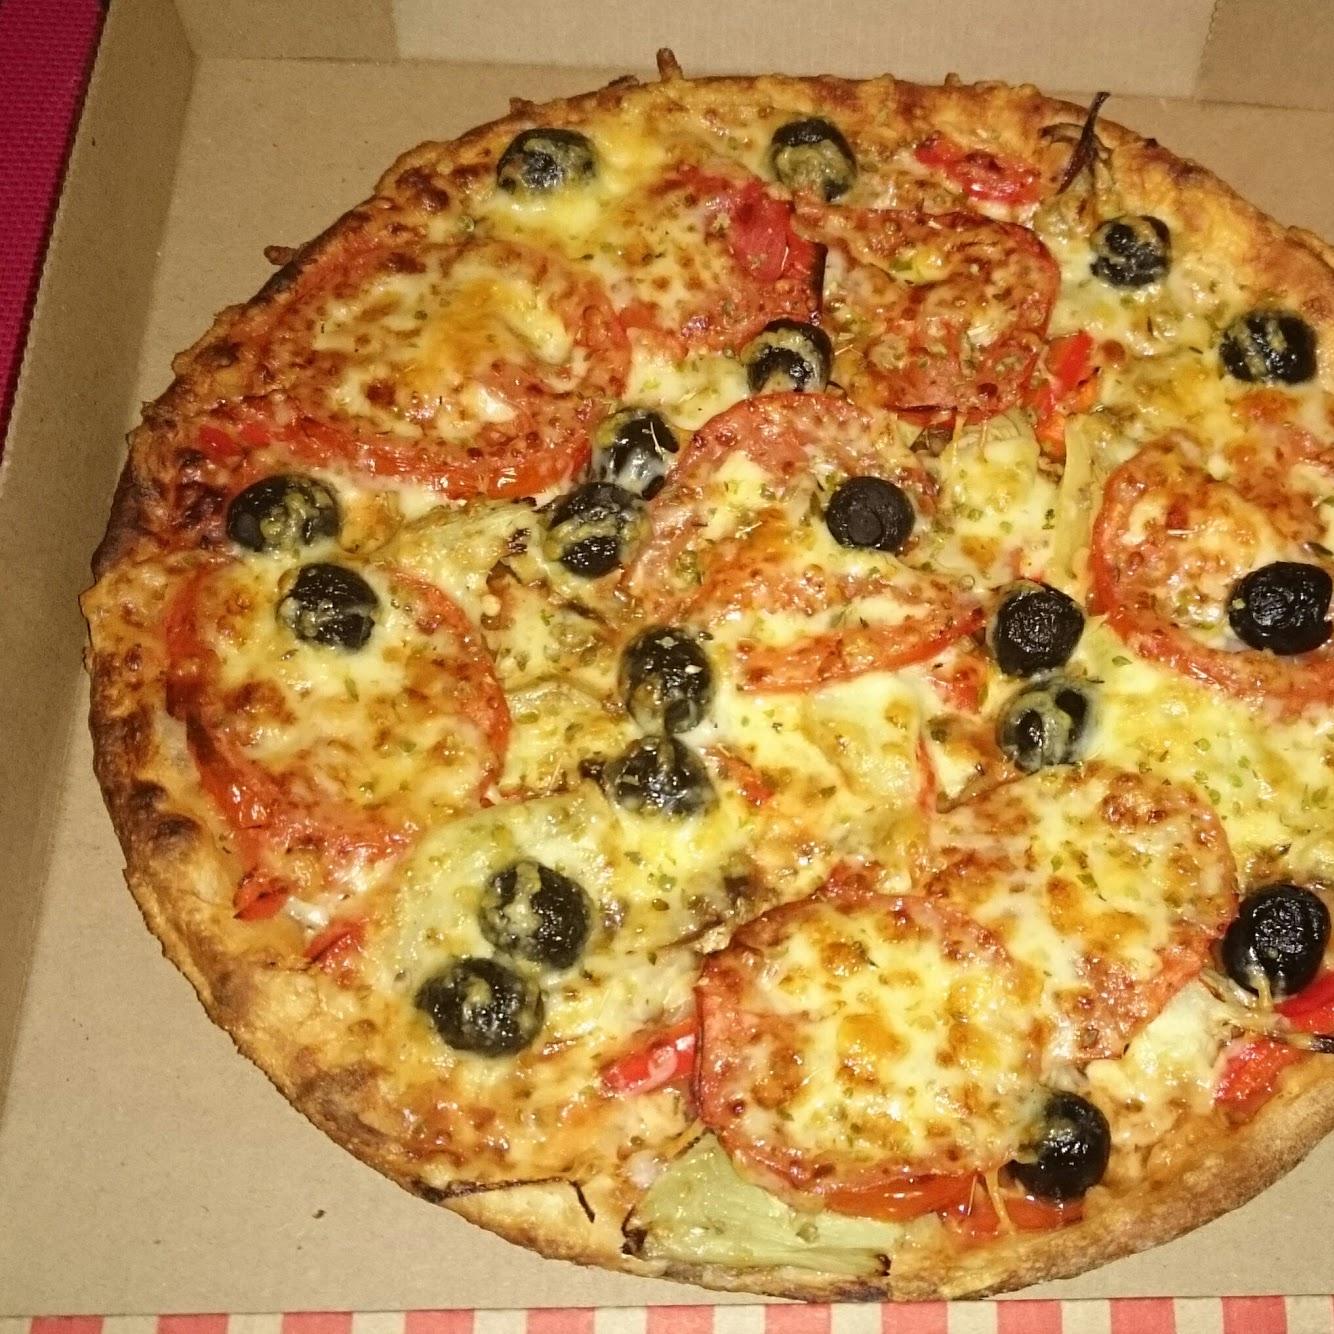 Restaurant "Pizzeria Napoli" in Marl